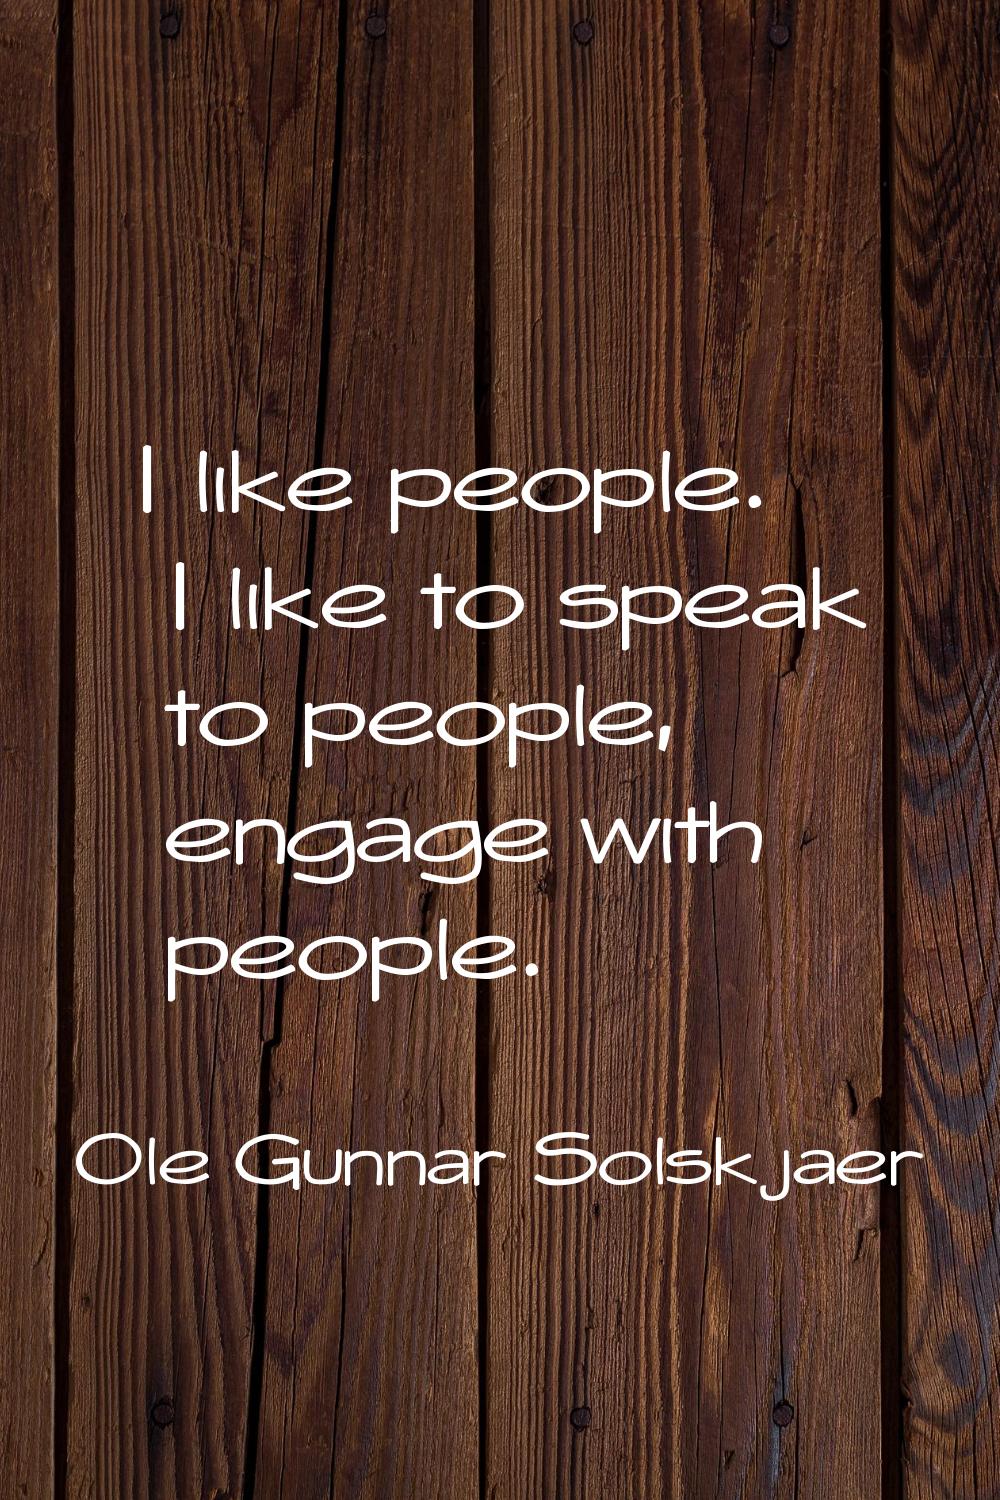 I like people. I like to speak to people, engage with people.